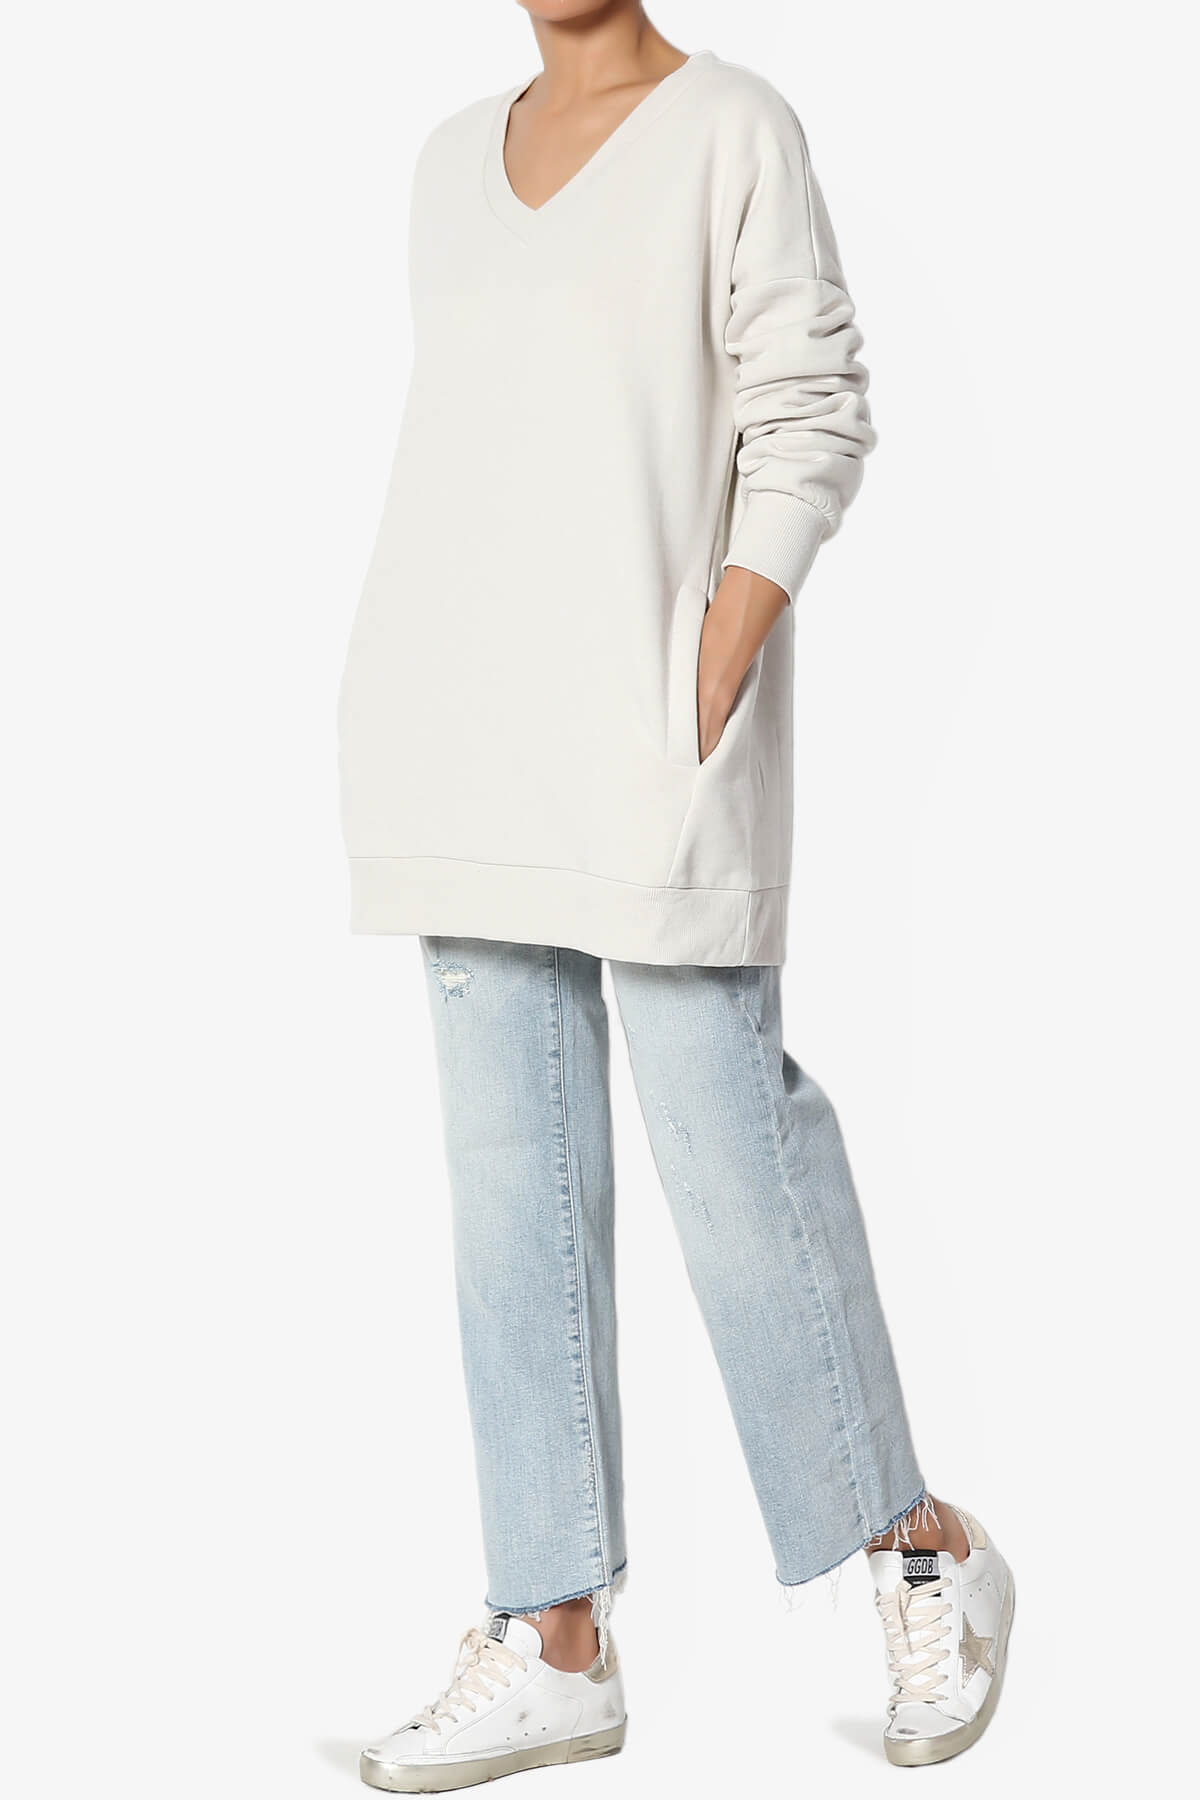 TheMogan Women's Casual Cozy Oversized V-Neck Pocket Fleece Pullover Sweatshirts